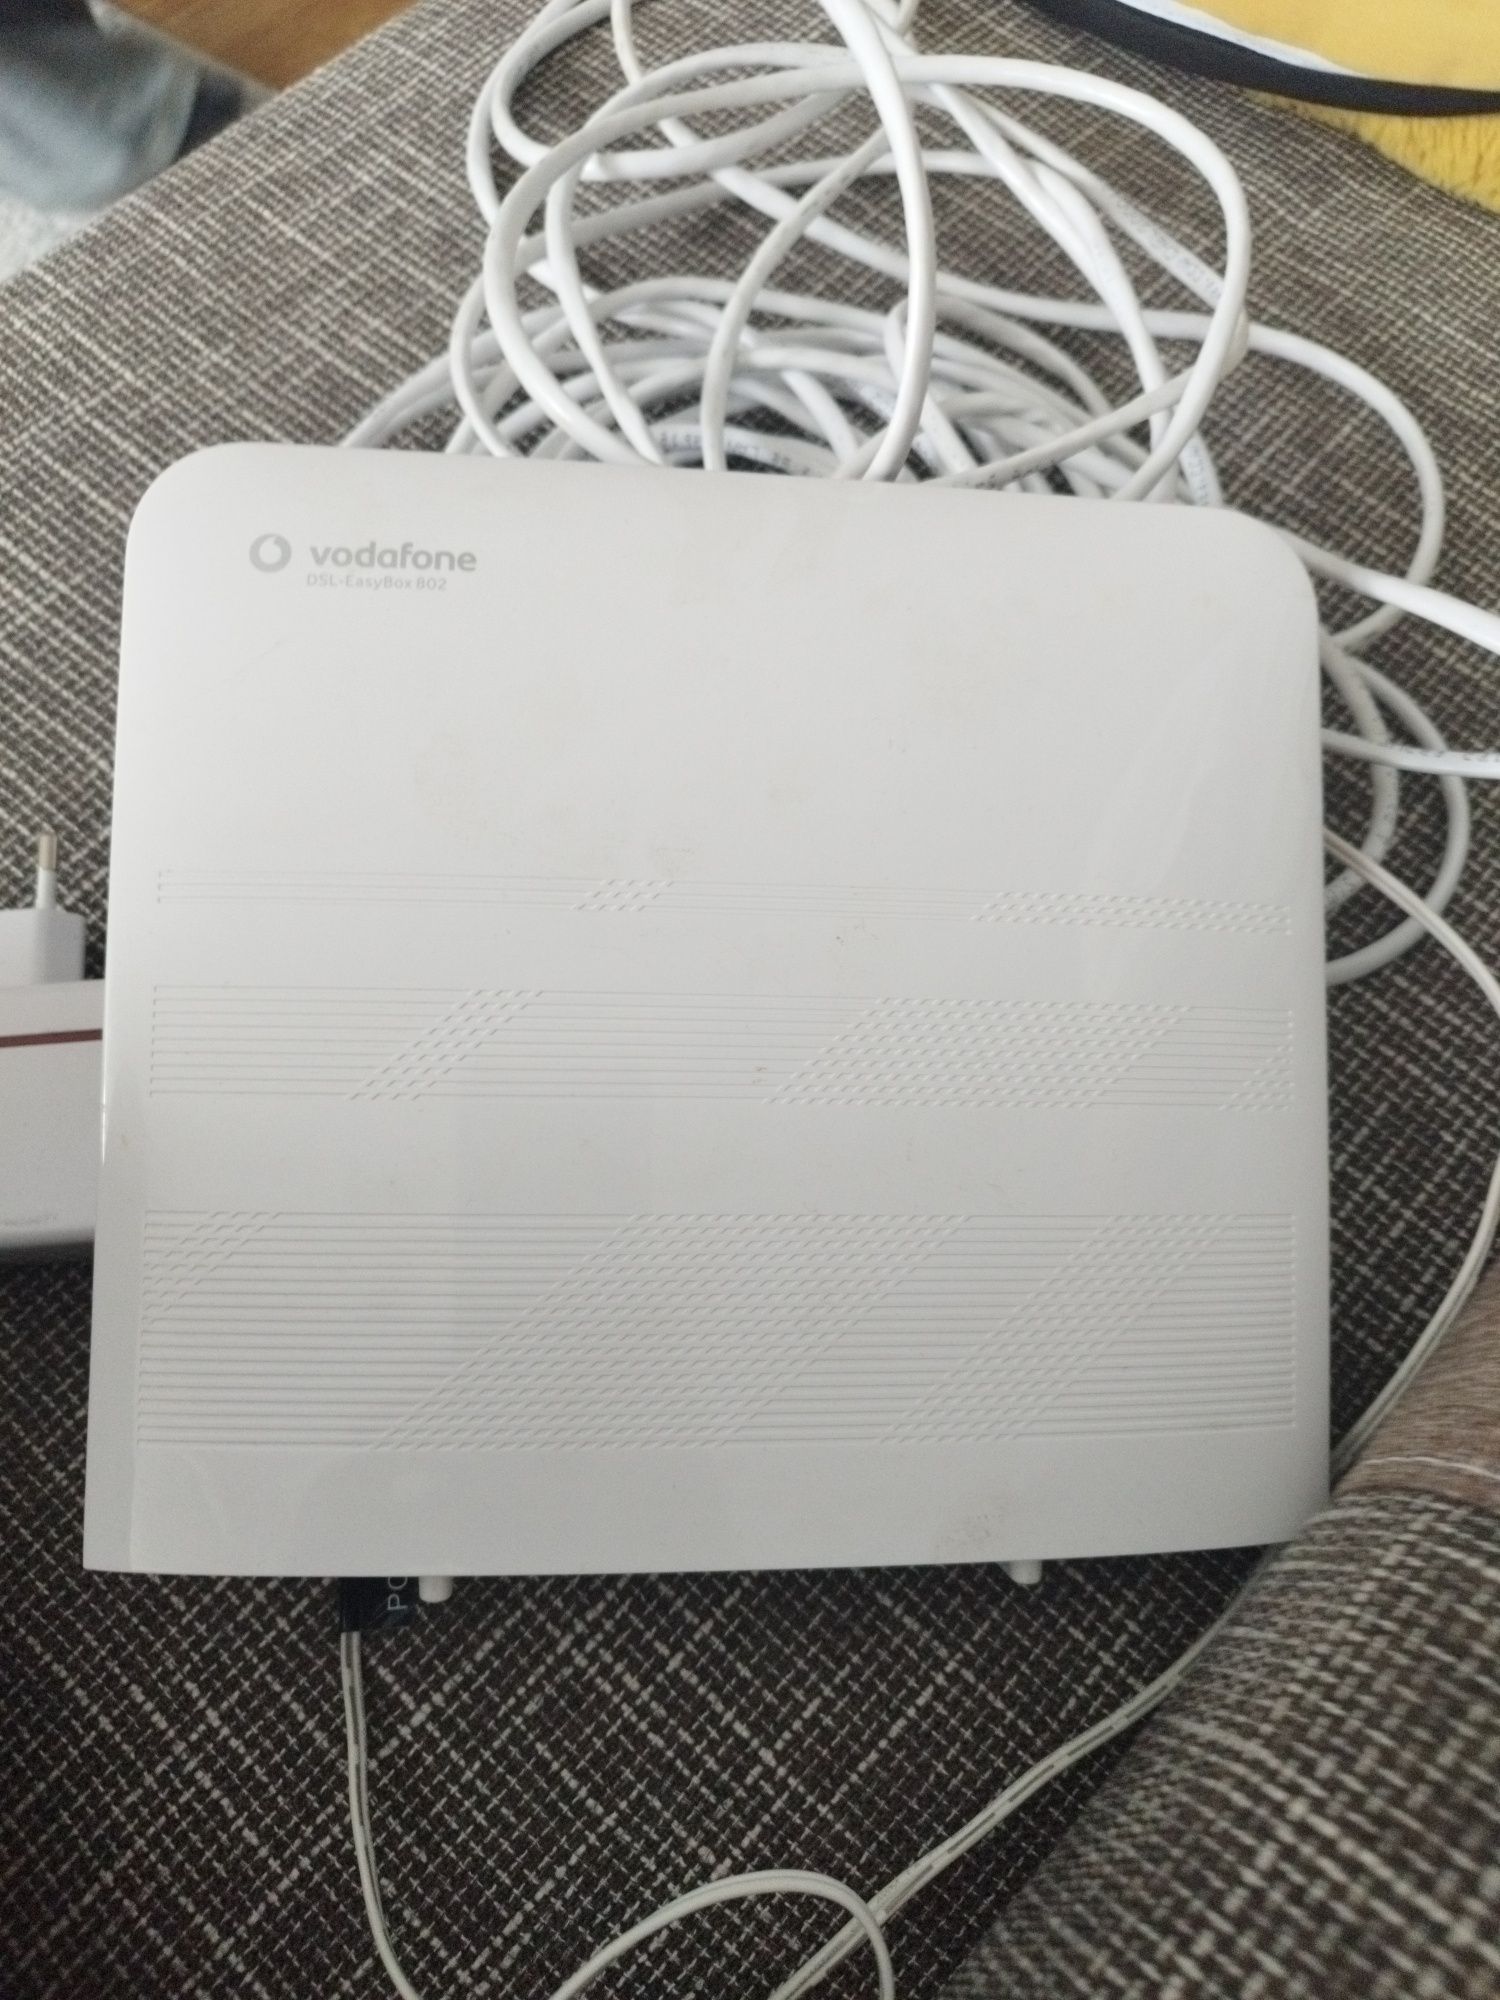 router vodafone dsl-easybox 802